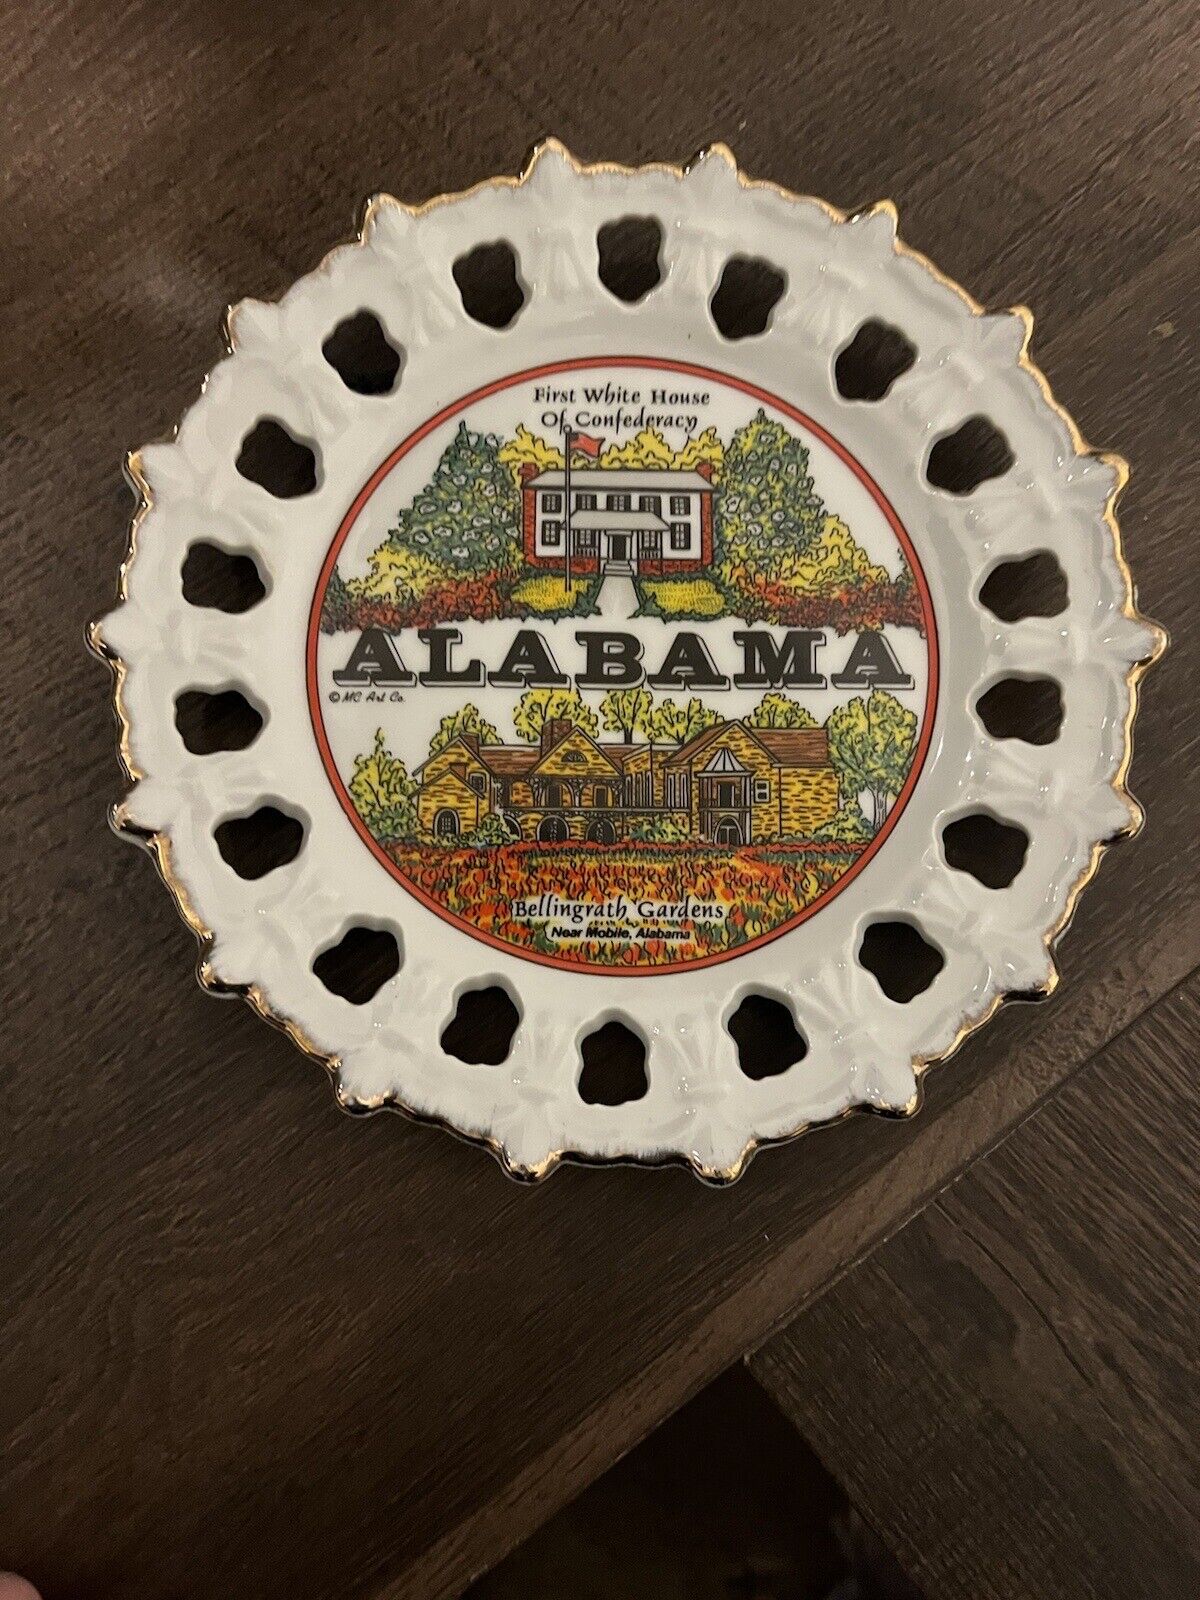 BAMA Fan's Vintage Alabama Souvenir Collector Plate 8.5” Reticulated Gold Edge